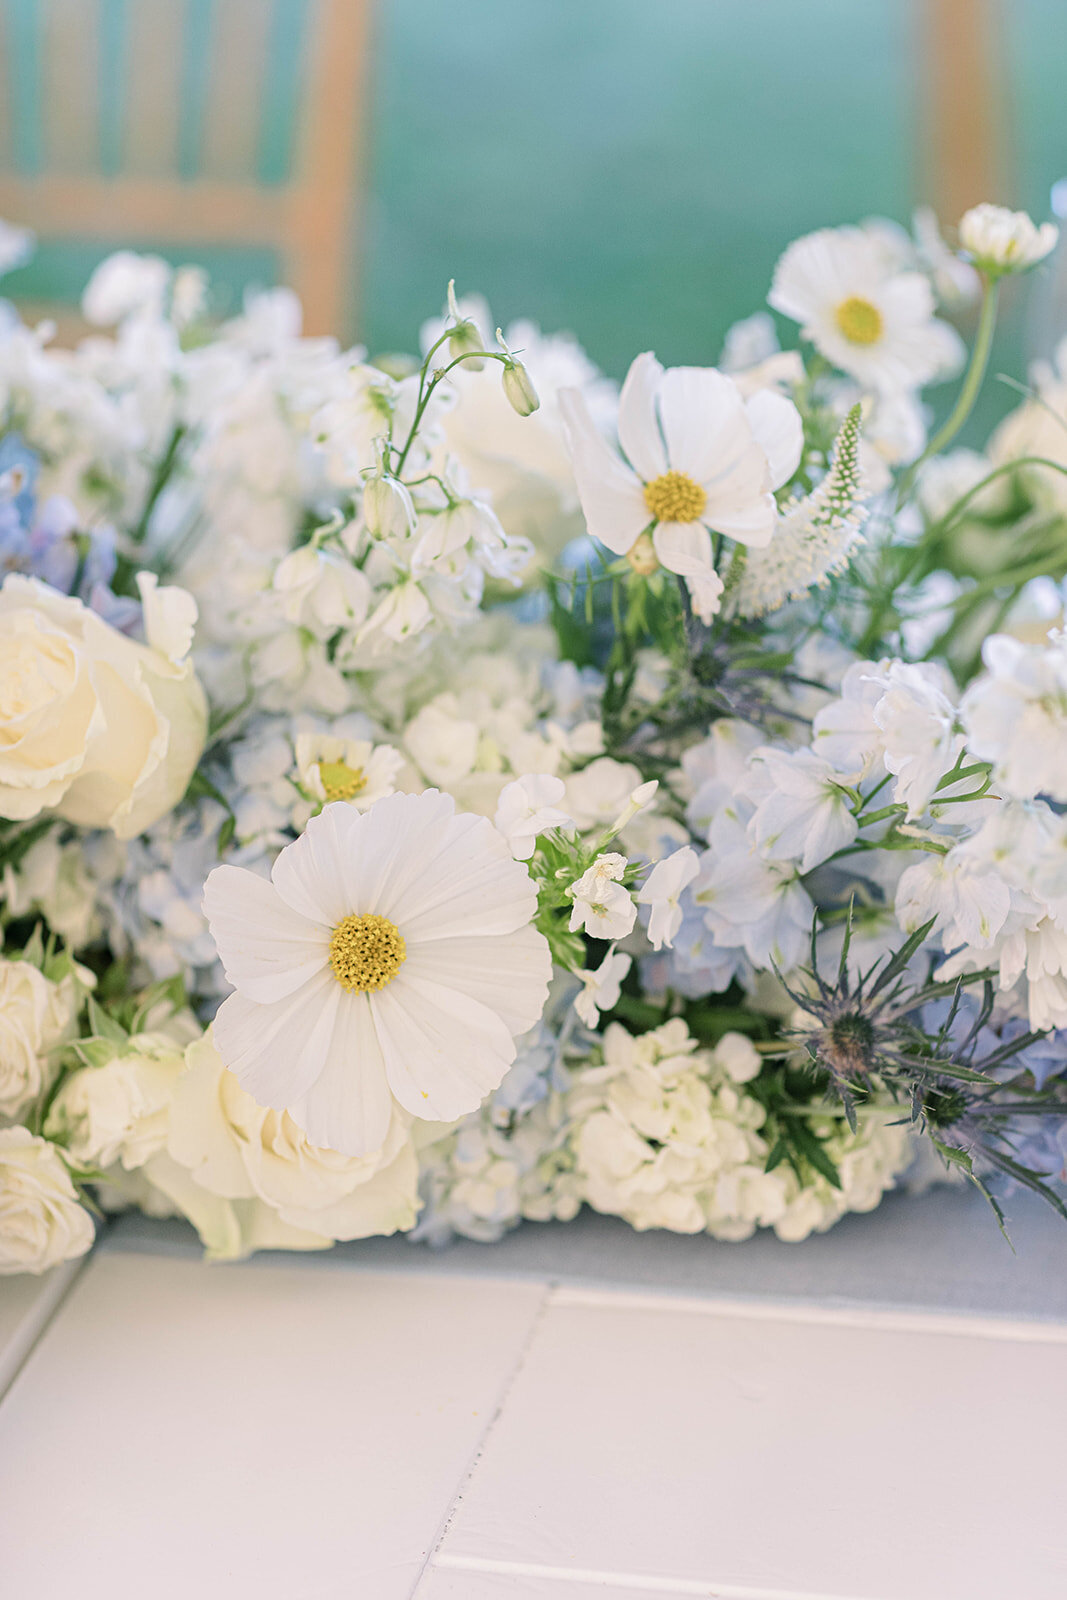 Kate-Murtaugh-Events-summer-flowers-centerpiece-Cape-Cod-Hyannis-Port-wedding